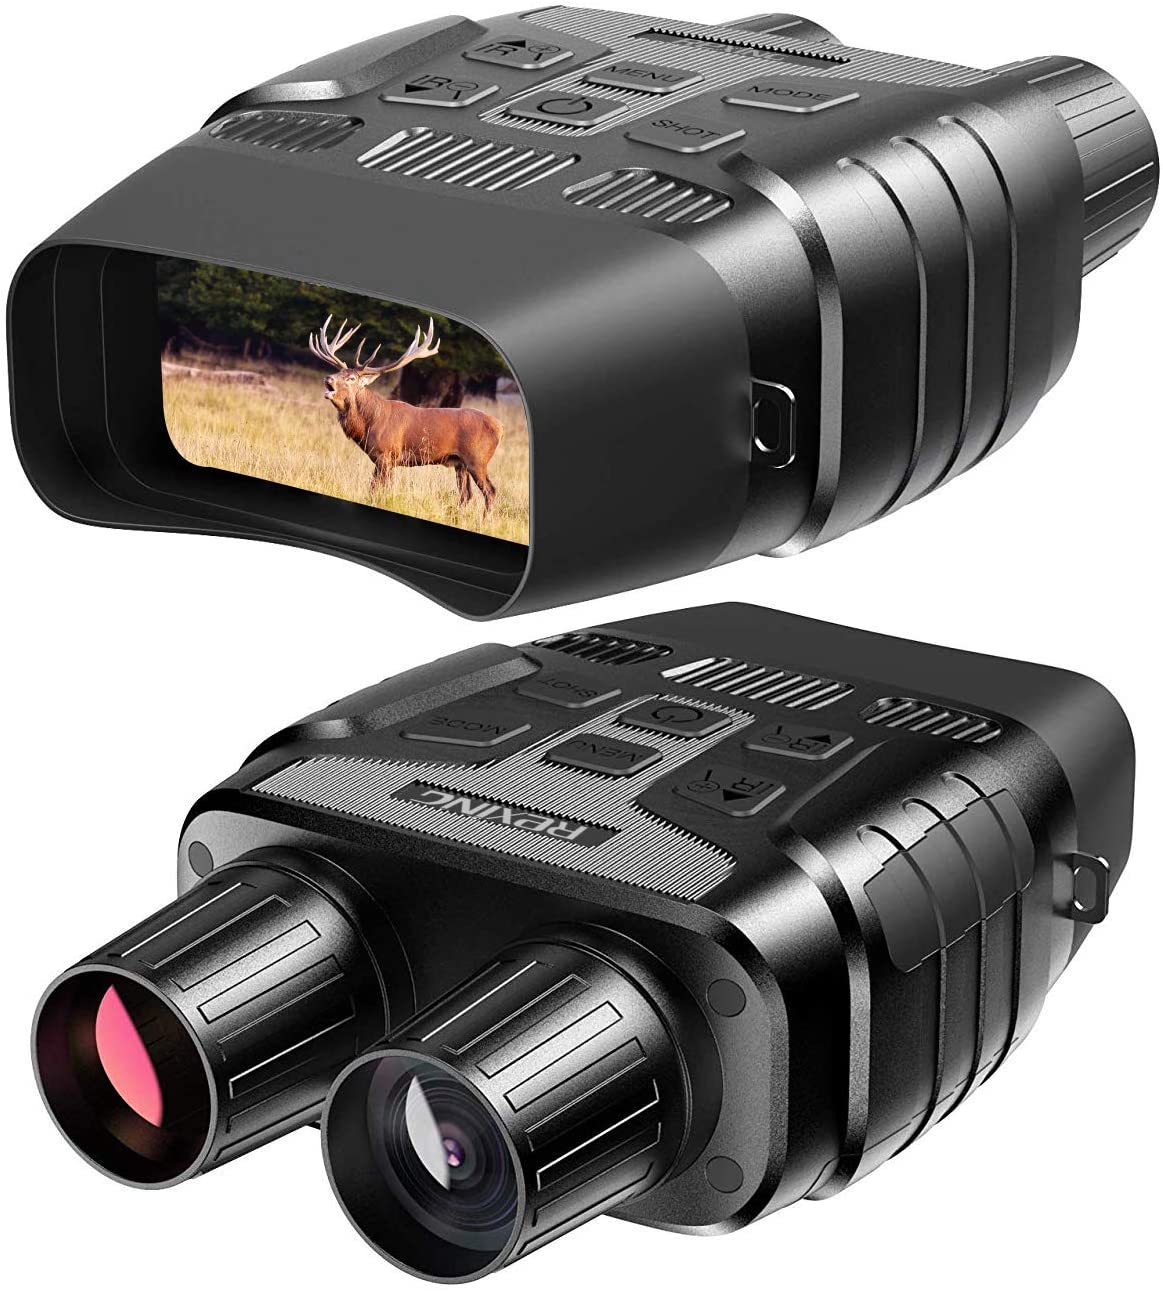 Rexing B1 Night Vision Infrared Digital Binoculars New in Box